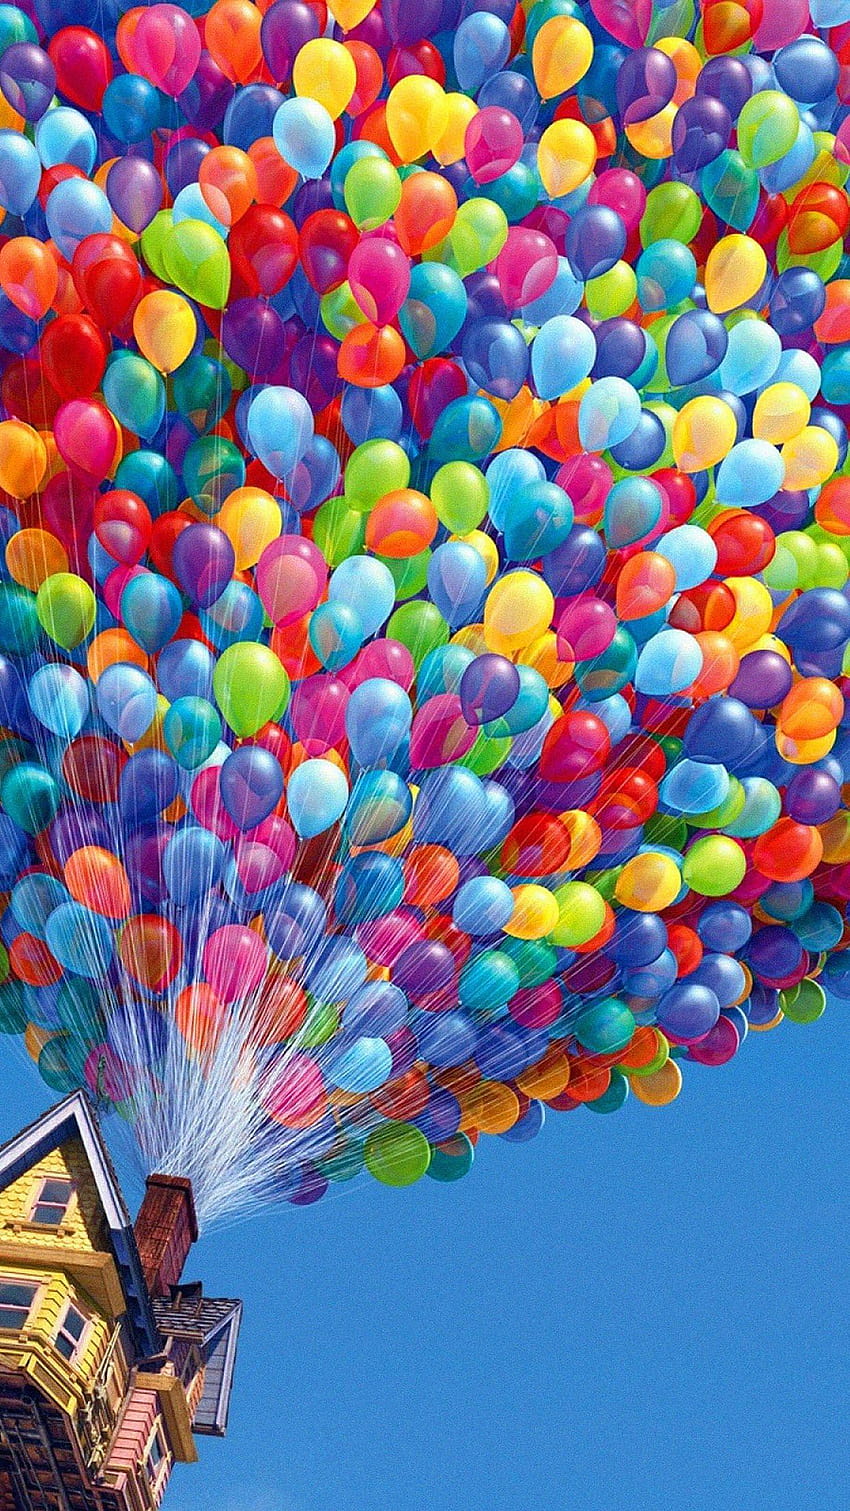 UP Movie Balloons House Gallery, balon-balon cantik wallpaper ponsel HD